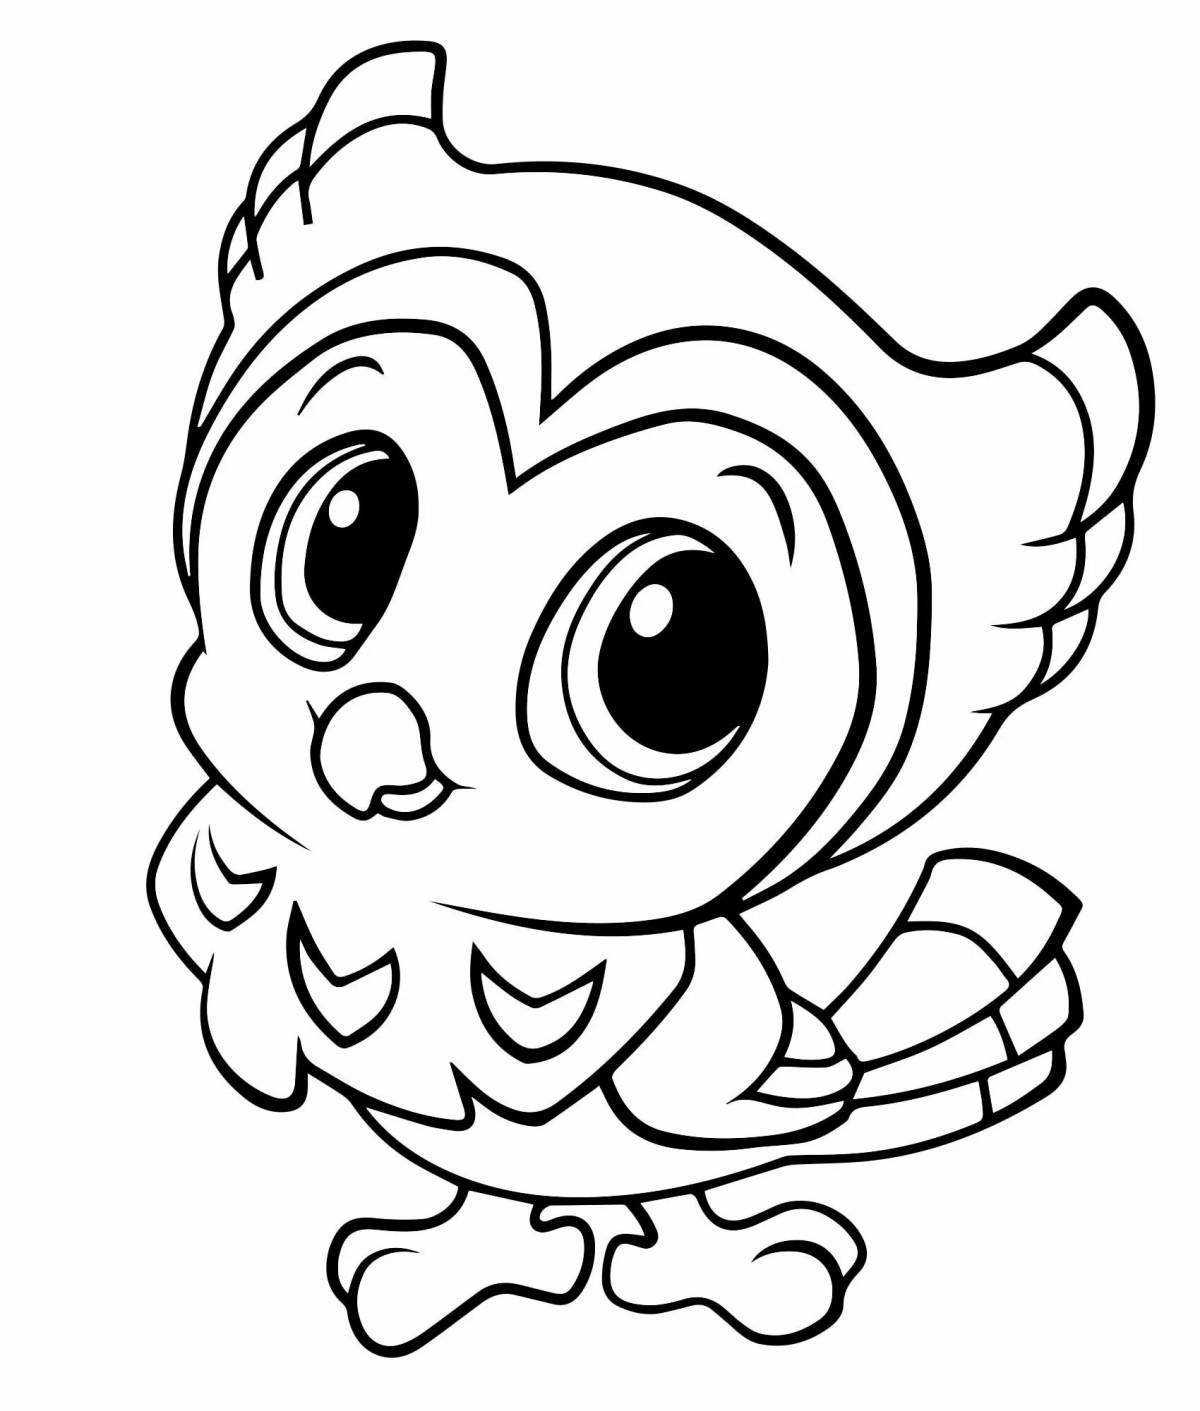 Joyful owlet coloring book for kids